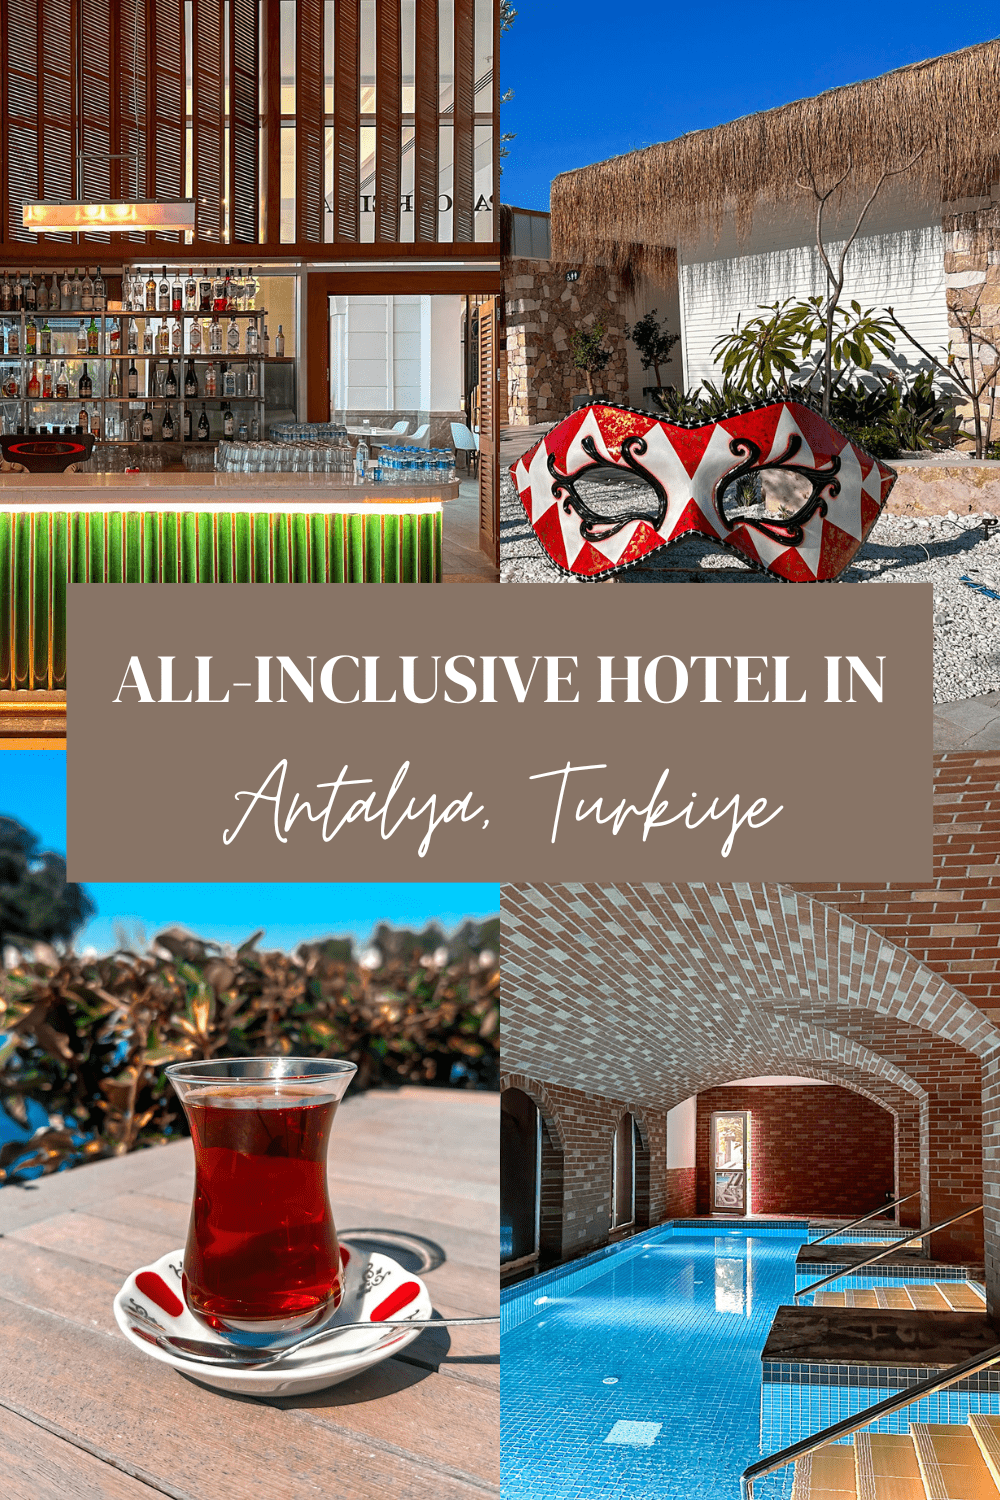 All-inclusive hotel Antalya